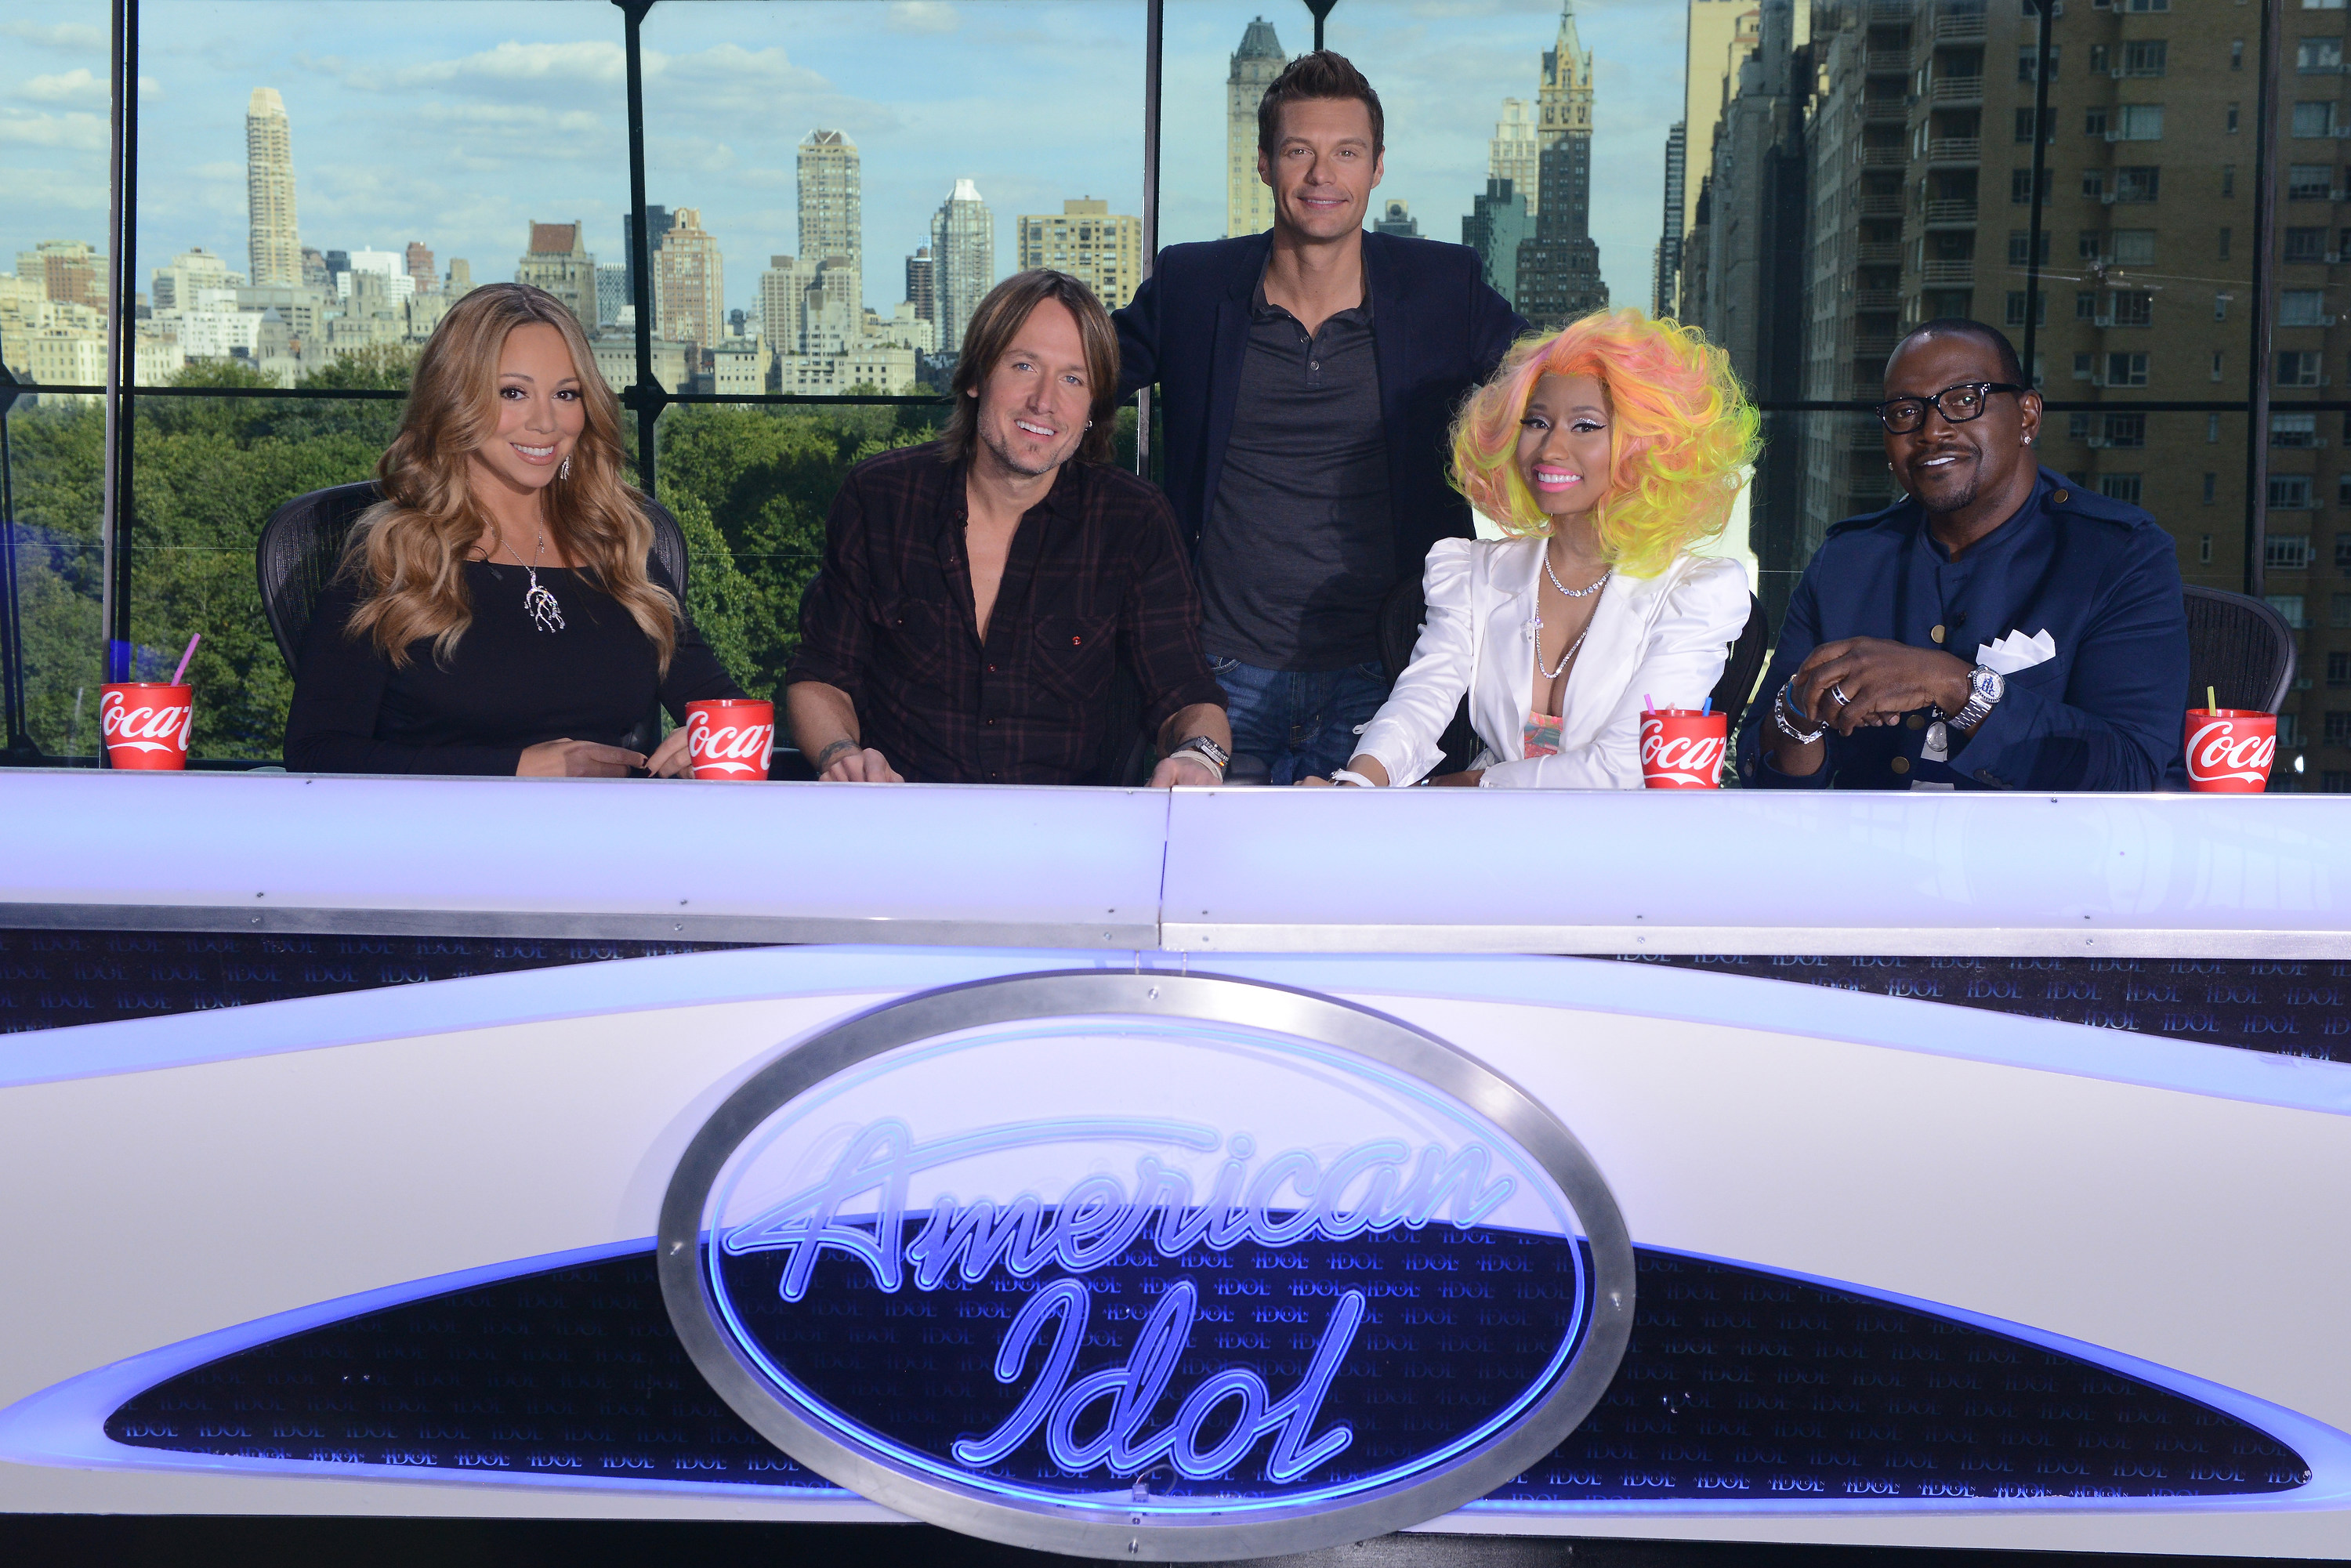 Mariah Carey, Keith Urban, Nicki Minaj, and Randy Jackson sit at the 'American Idol' desk. Ryan Seacrest stands behind them.